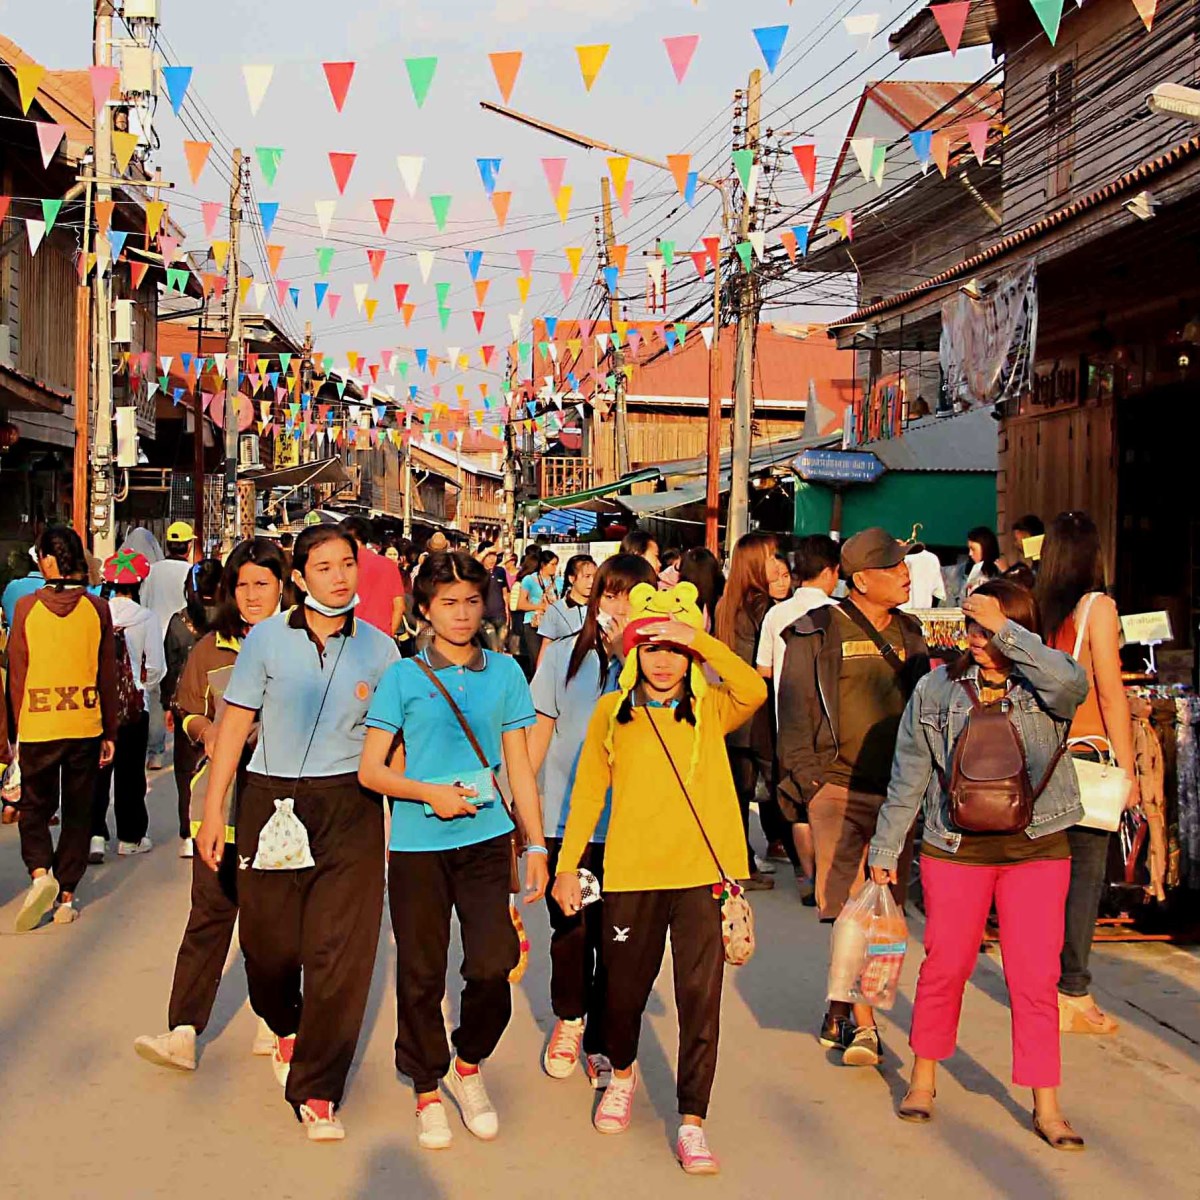 Thailand: The Chiang Khan Walking Street